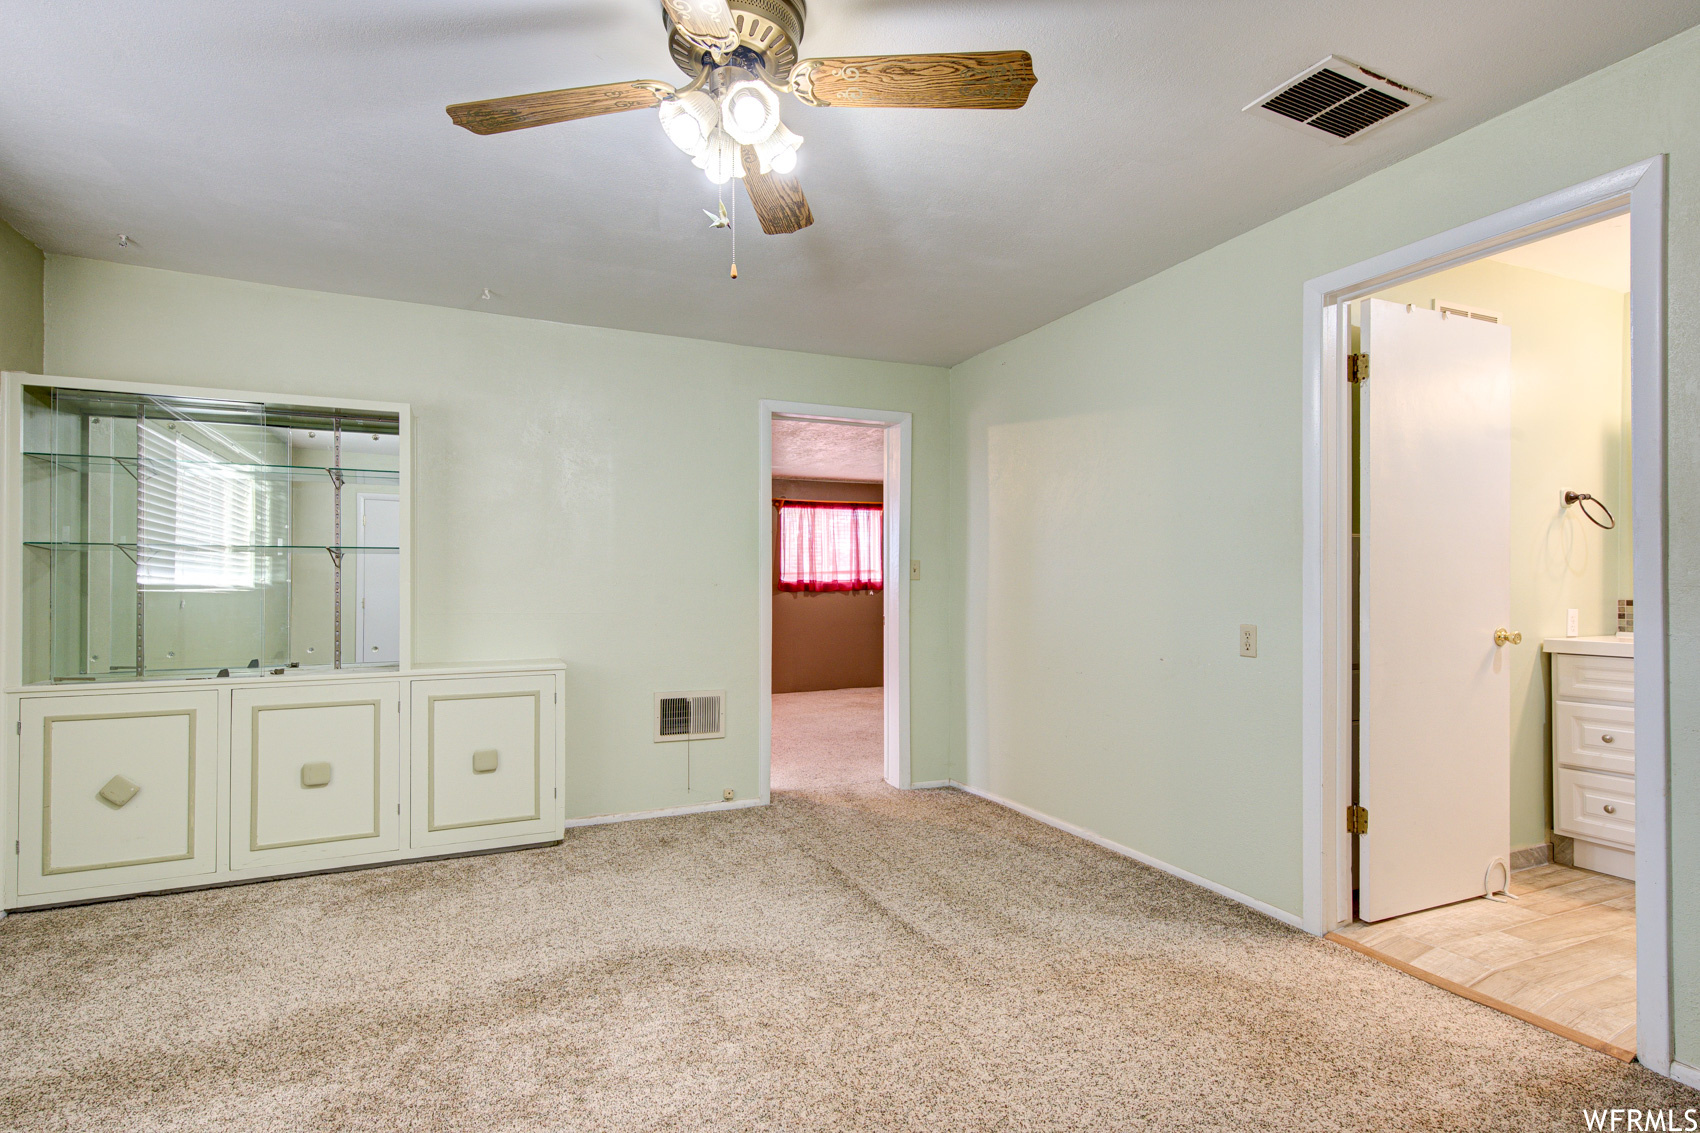 Unfurnished bedroom featuring ensuite bathroom, ceiling fan, and light tile flooring